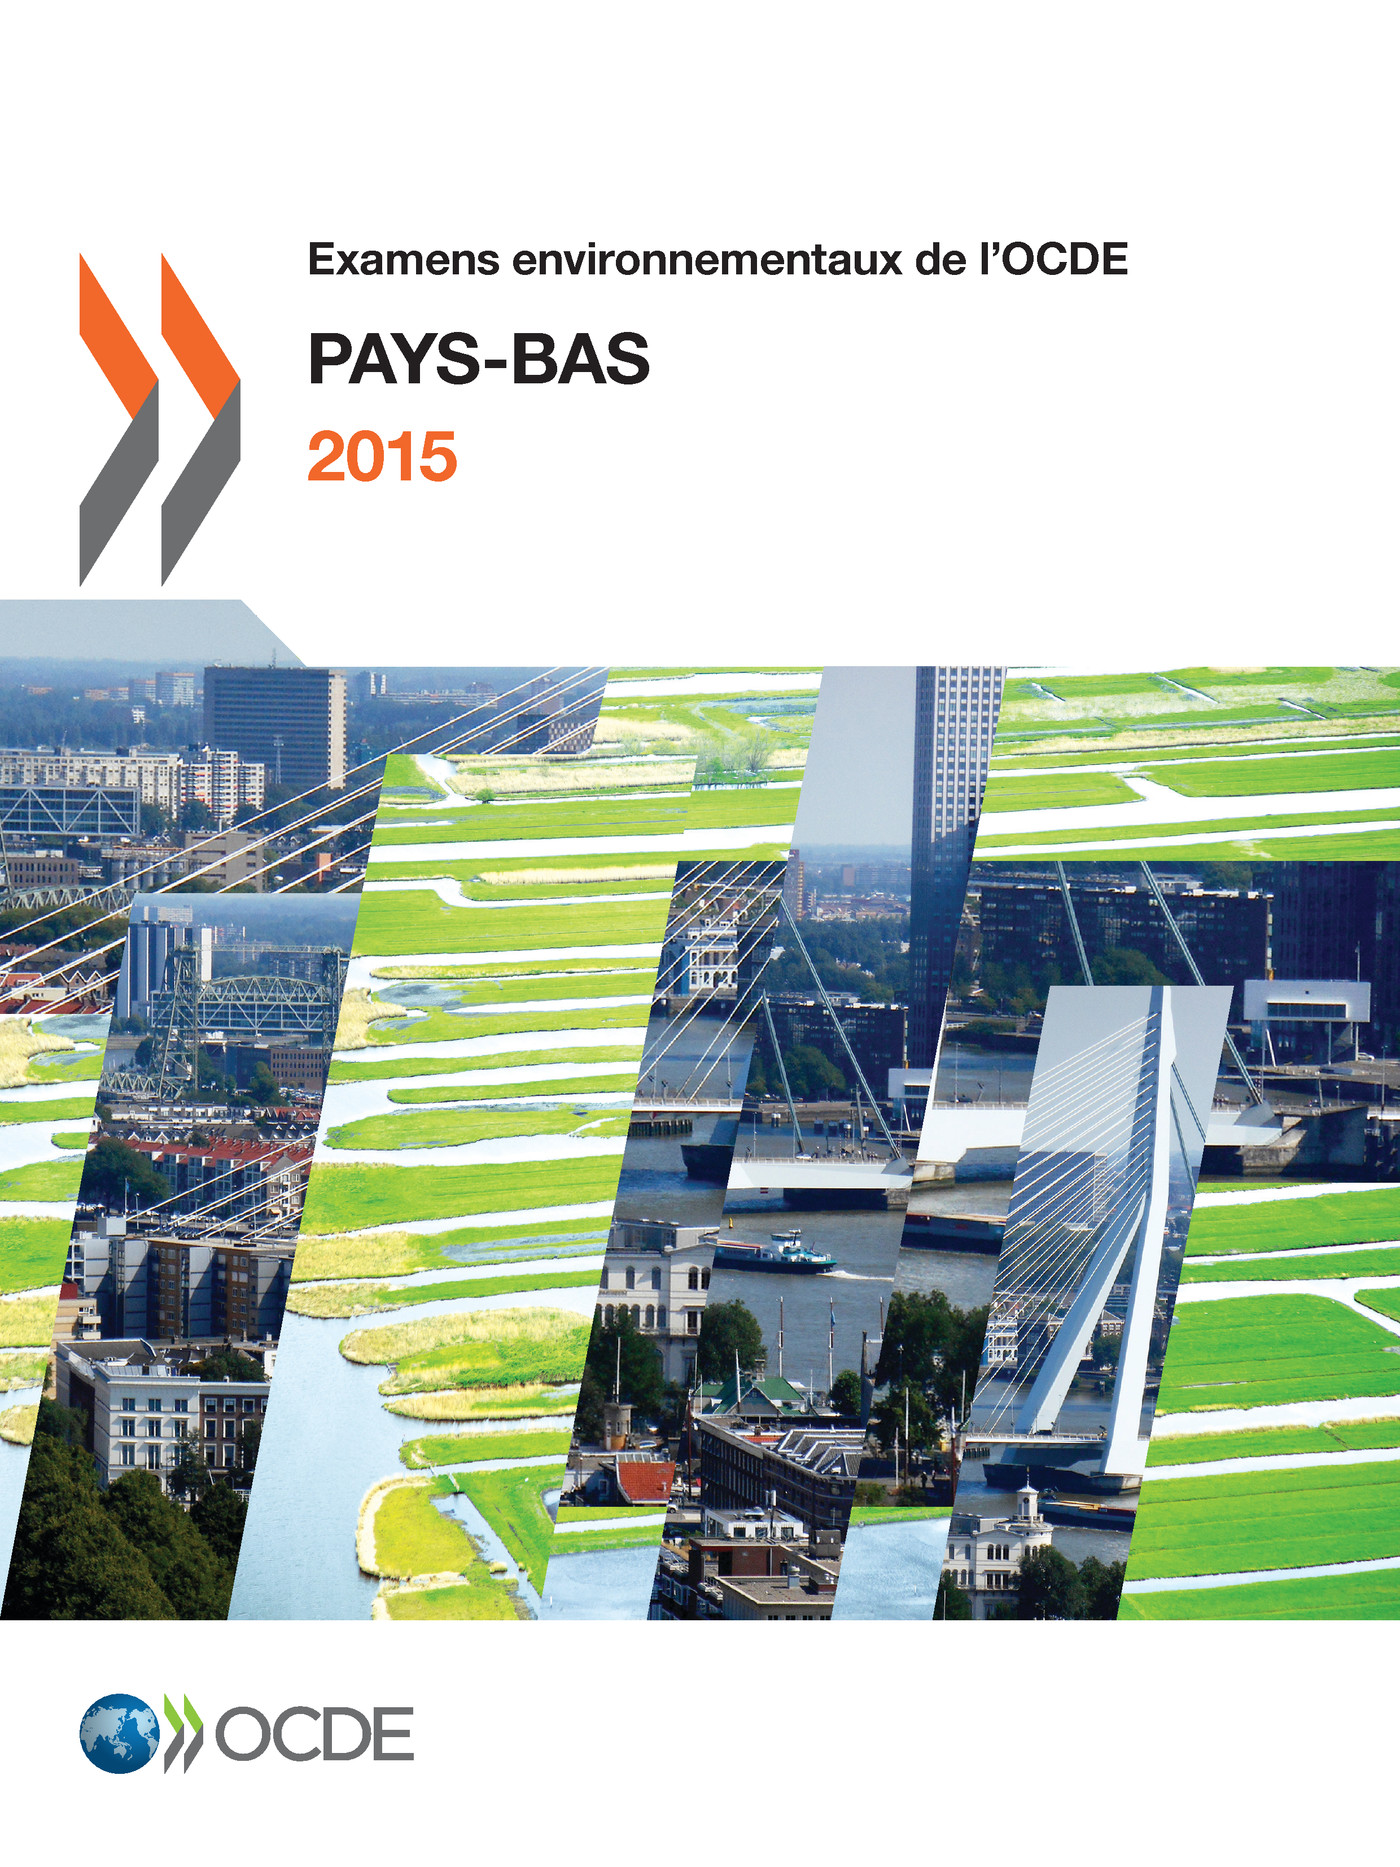 Examens environnementaux de l'OCDE : Pays-Bas 2015 -  Collectif - OCDE / OECD